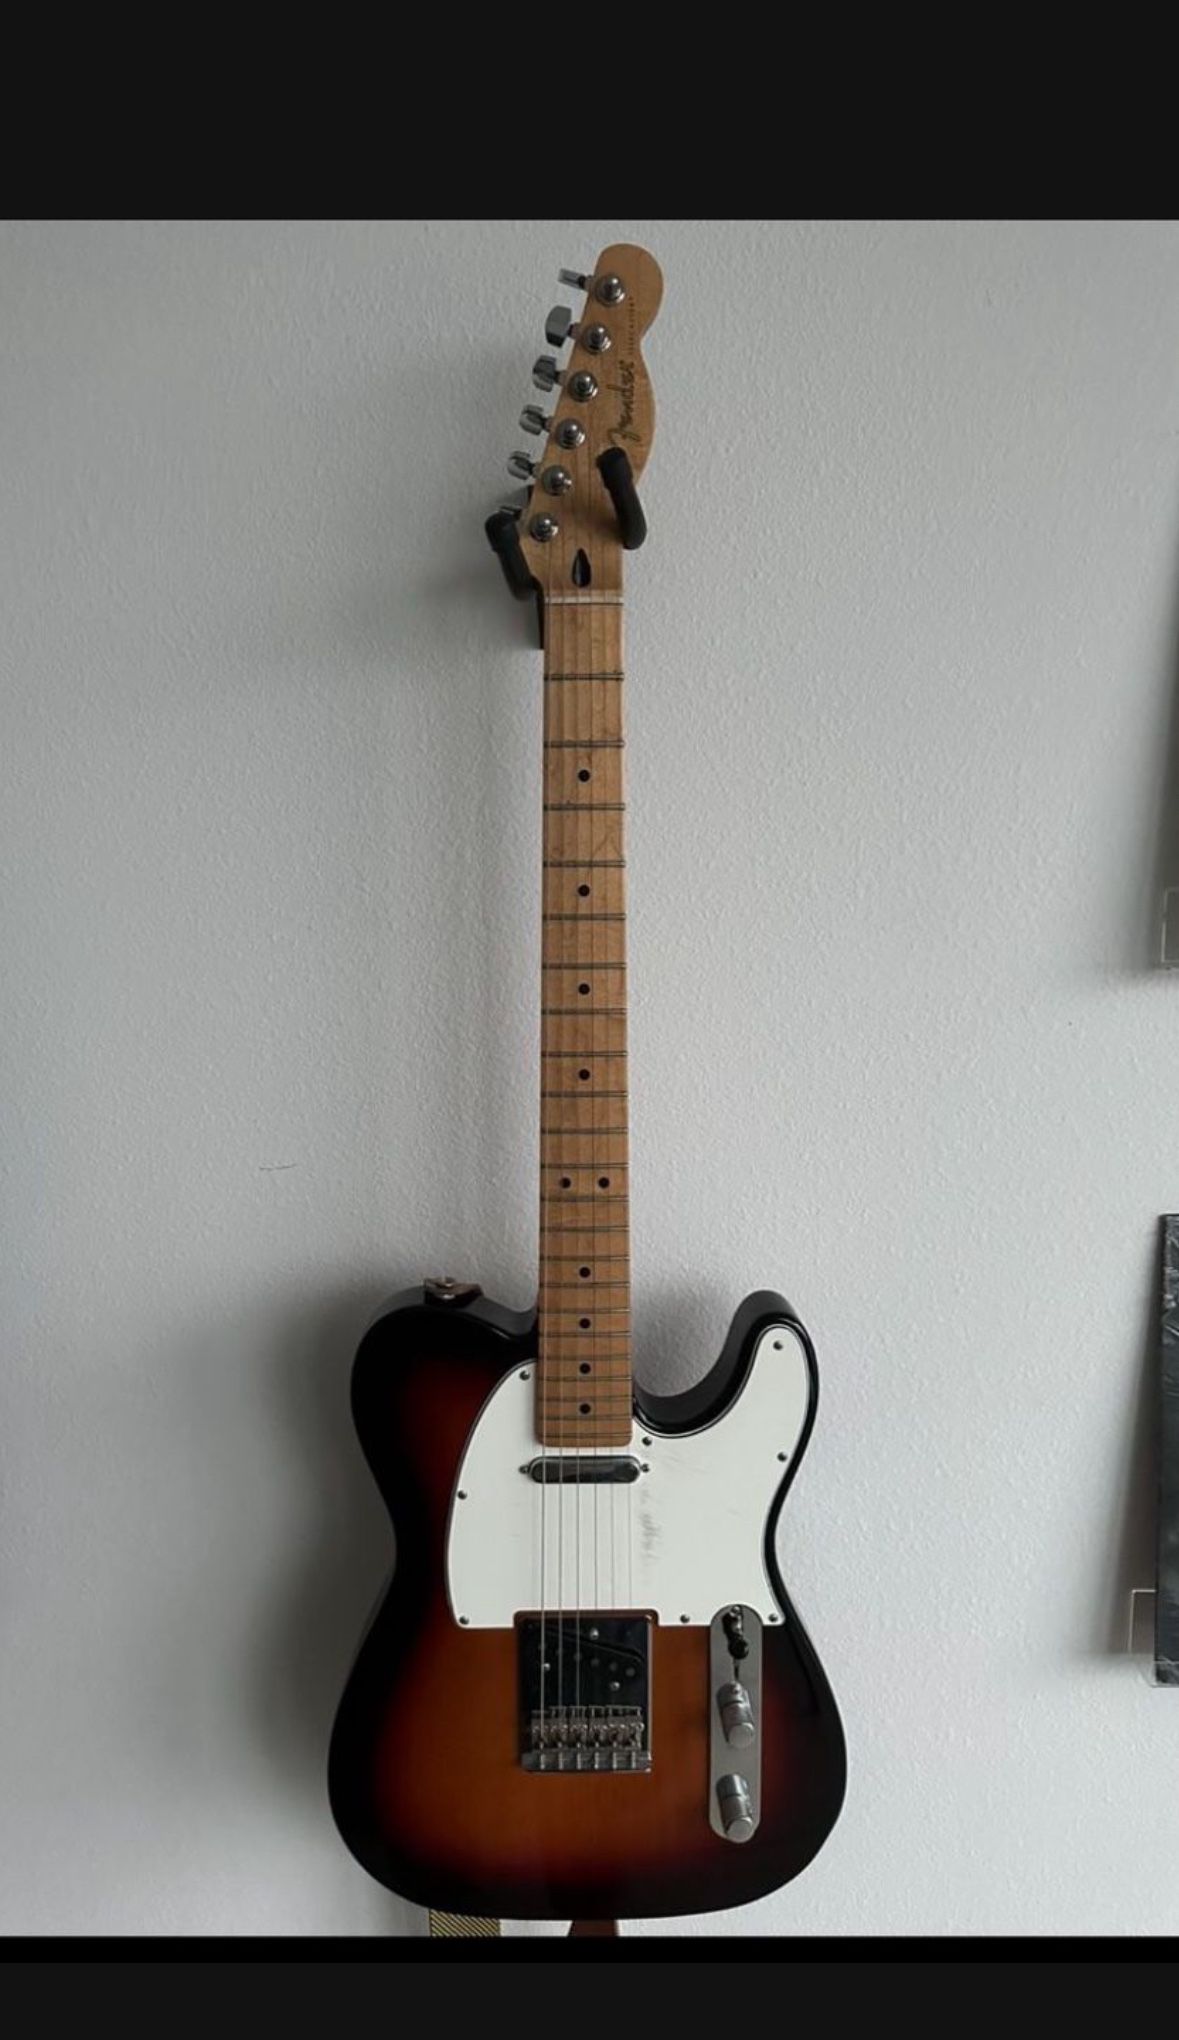 Fender Telecaater MIM , 2 Amps